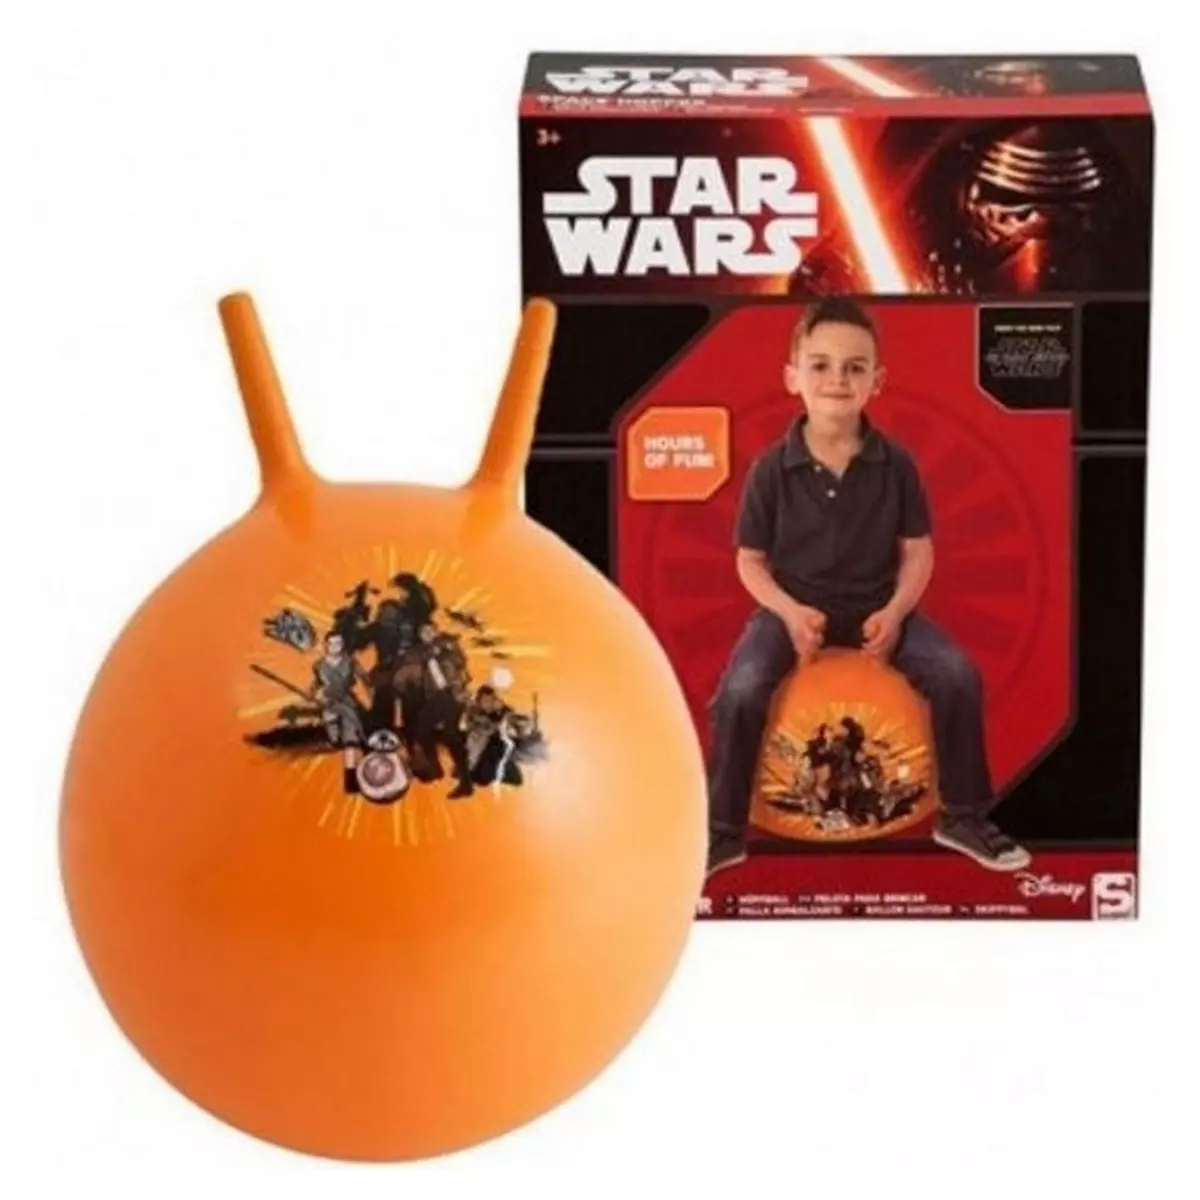 Star Wars Ballon sauteur Star Wars pogo enfant balle rebondissante